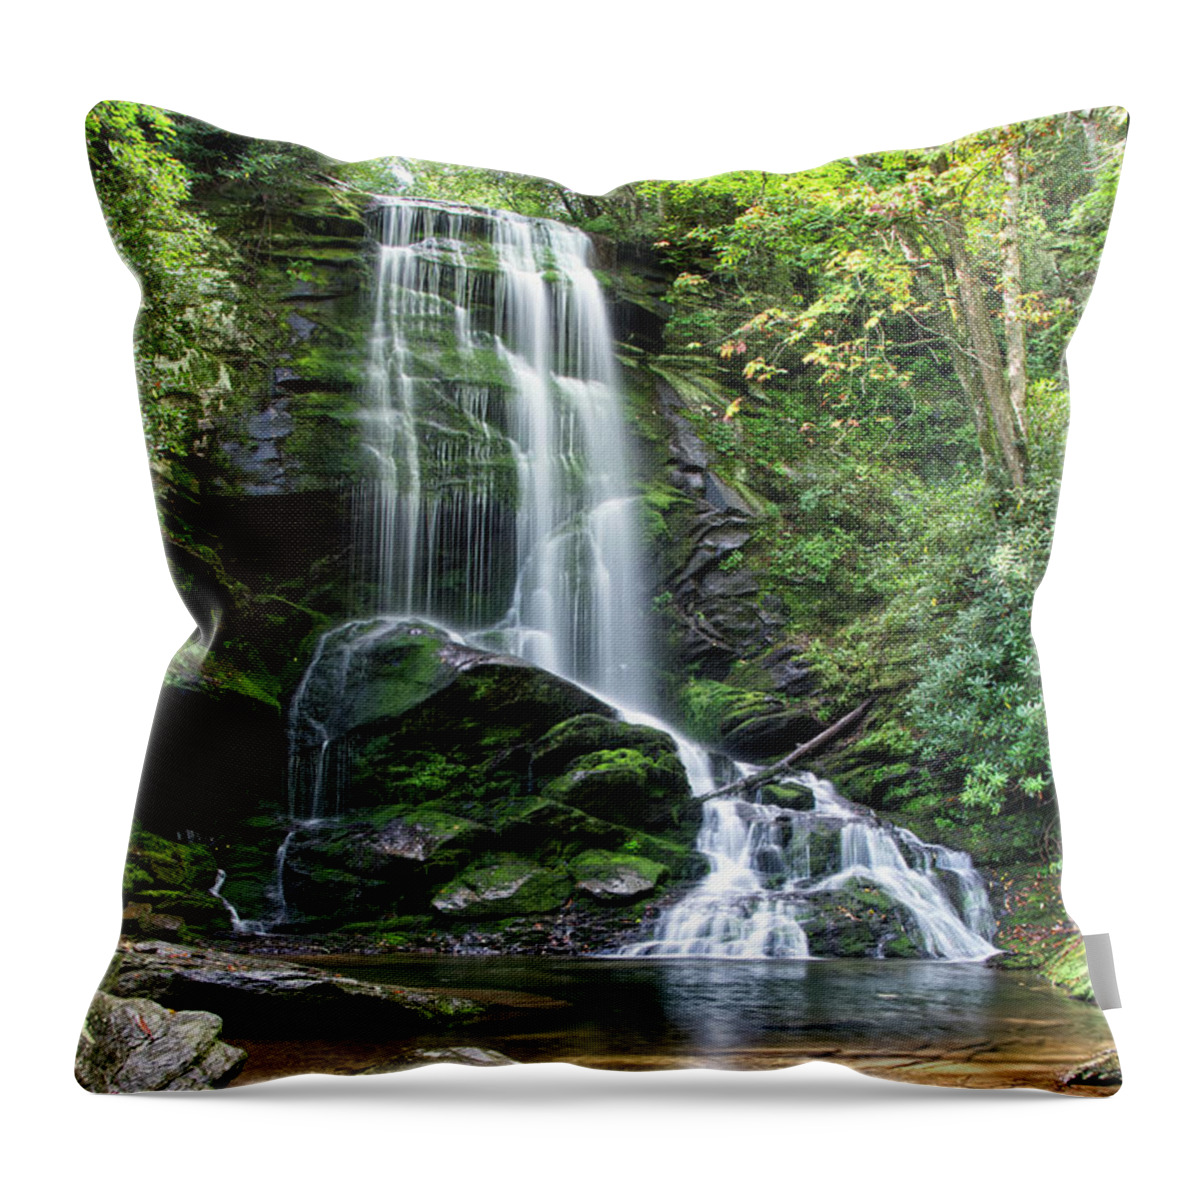 Catawba Falls Throw Pillow featuring the photograph Catawba Falls 14 by Phil Perkins